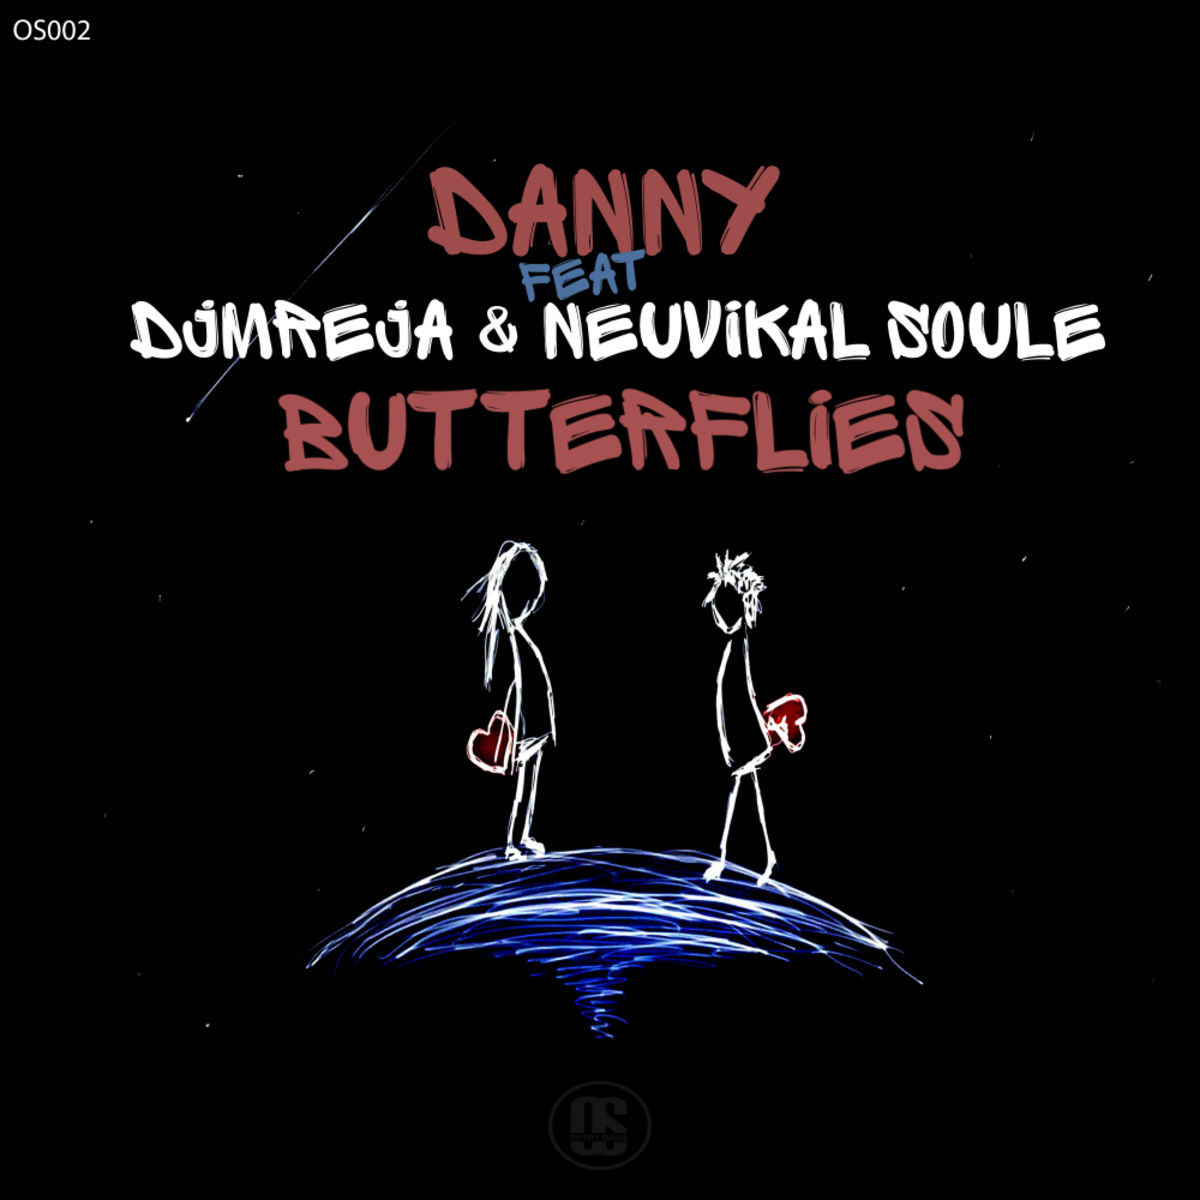 Danny ft Neuvikal soule & DJMReja - Butterflies / Odyssey Sounds